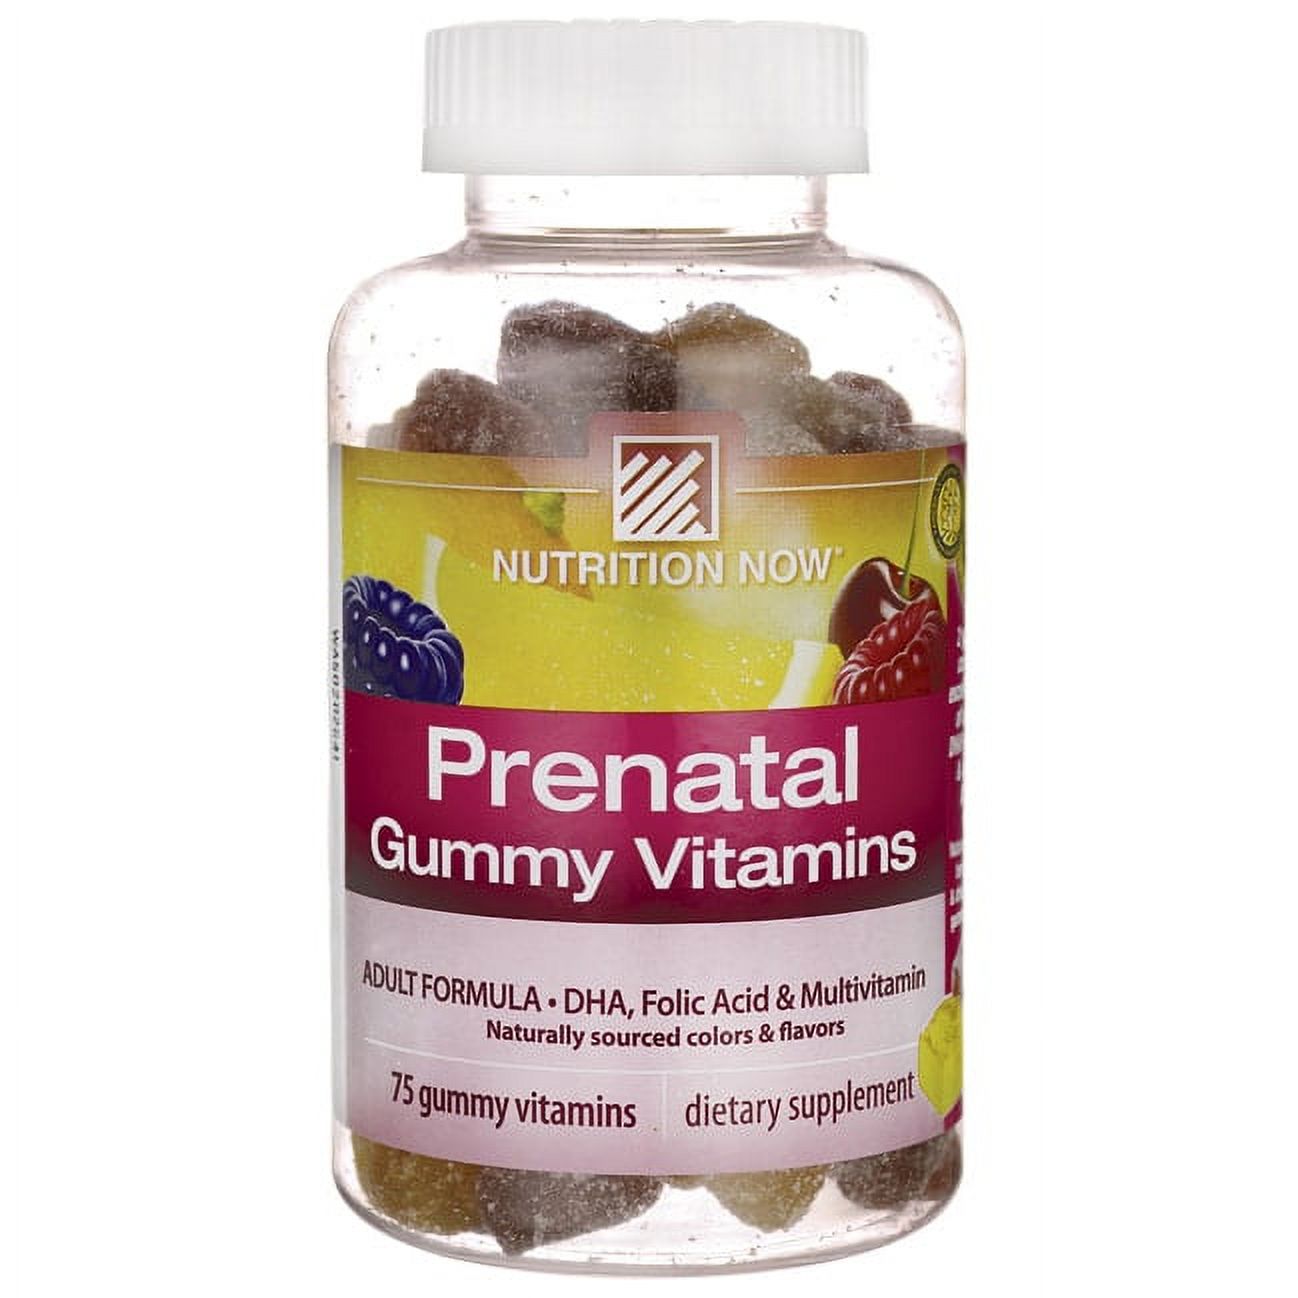 Nutrition Now - Prenatal Gummy Vitamins - 75 Gummies - image 1 of 2